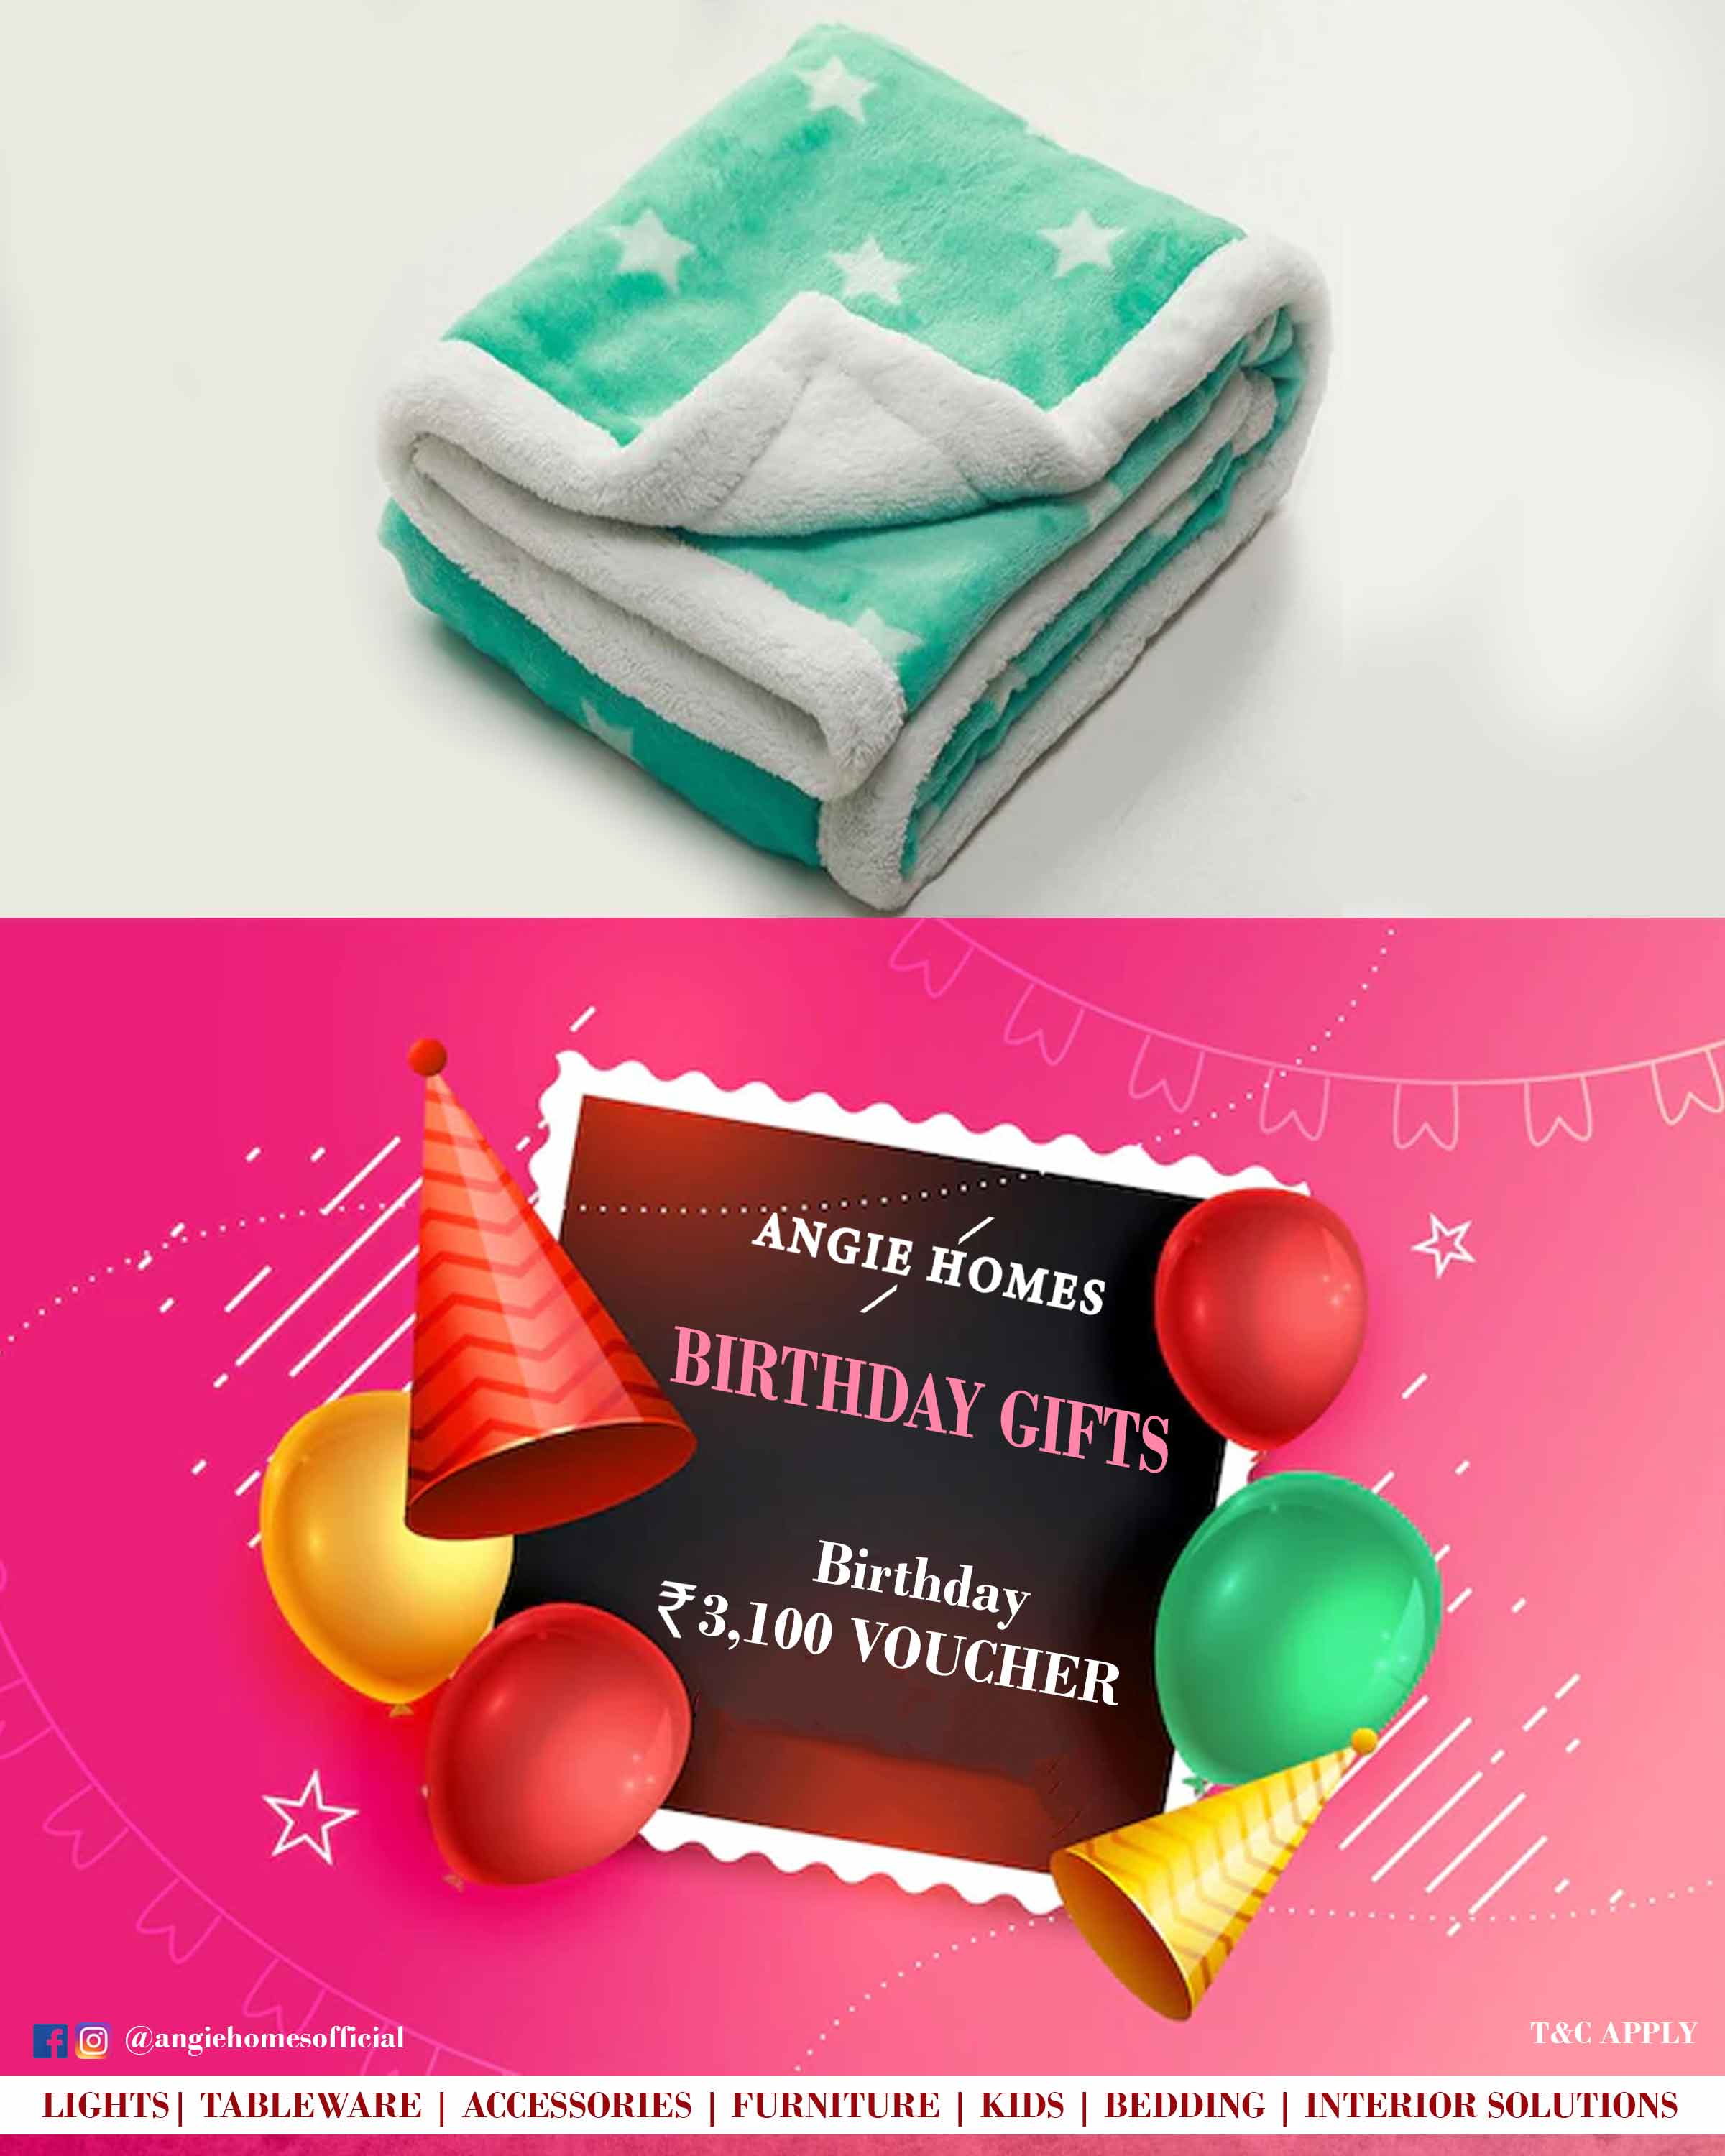 Baby Bedding | Happy Birthday Gift Voucher for Kids Blanket ANGIE HOMES